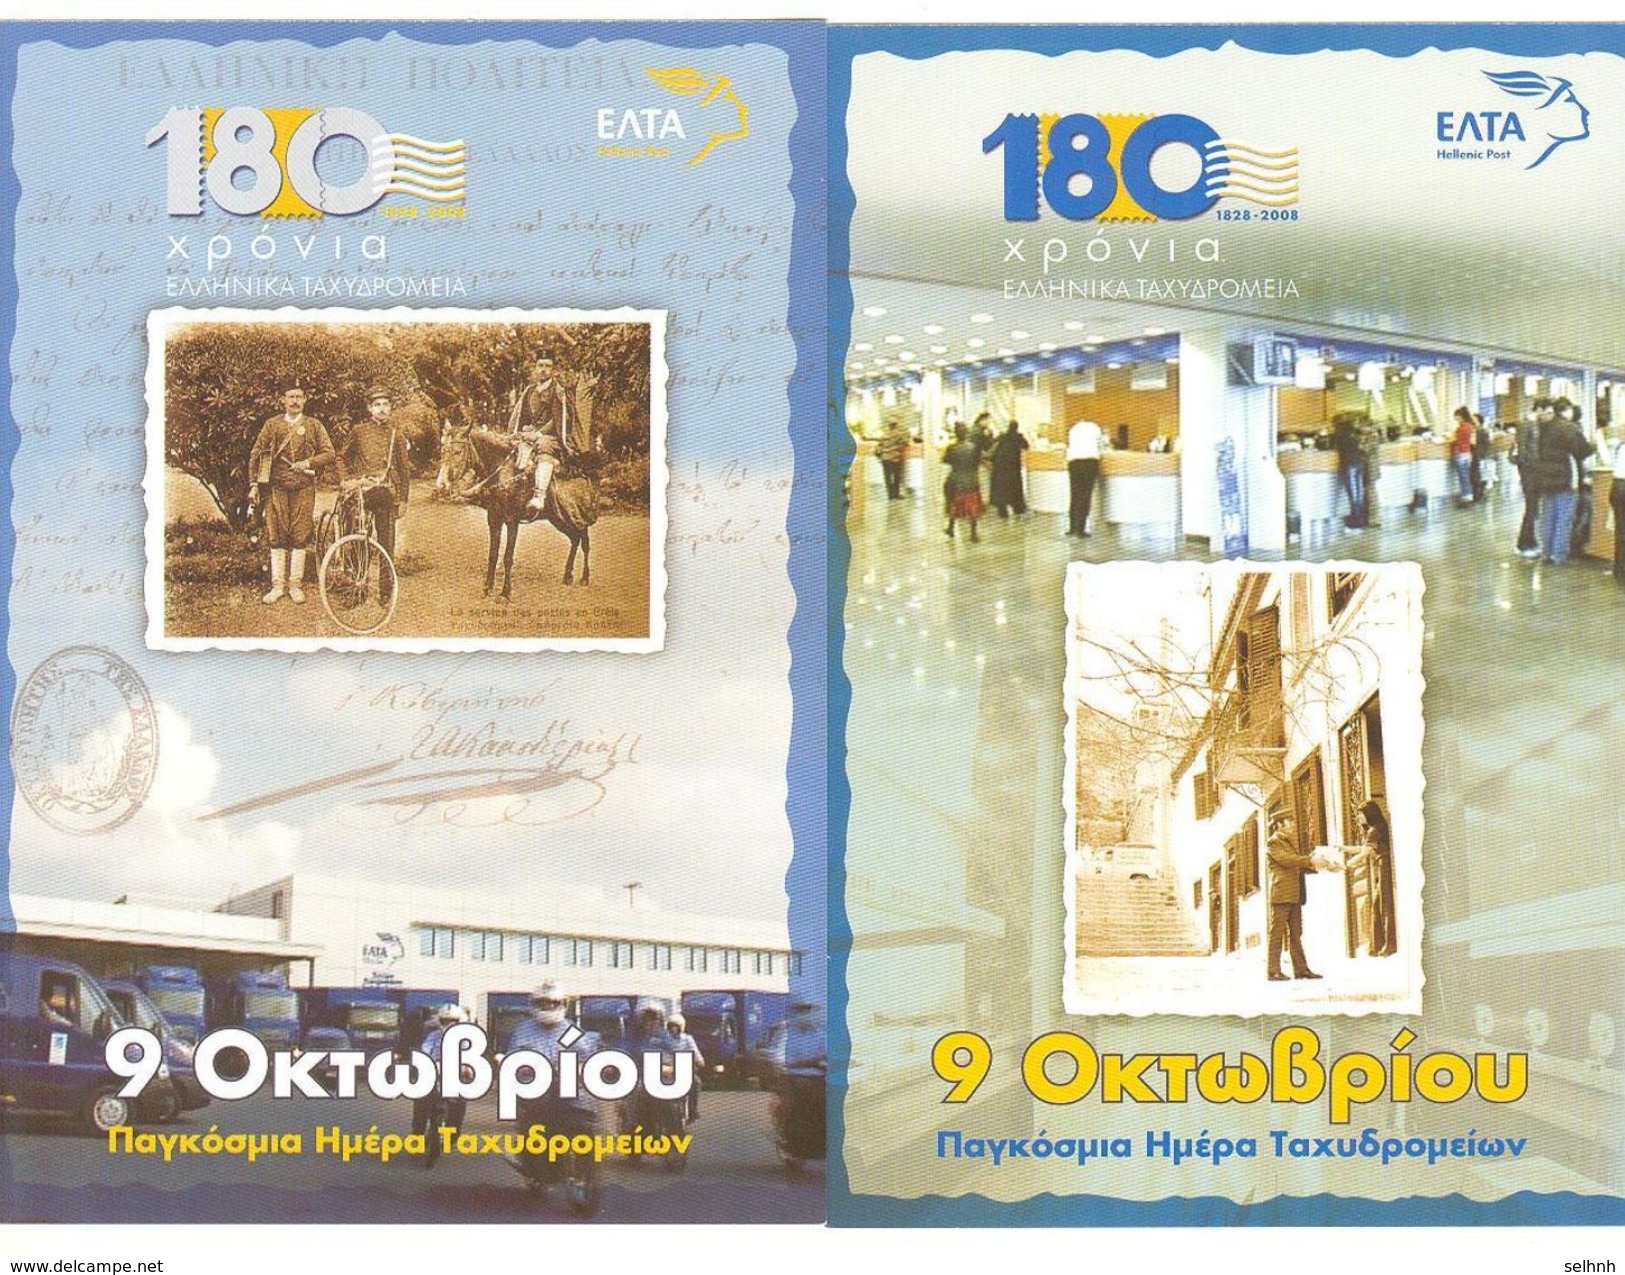 GREECE GRECE GREEK COMMEMORATIVE POSTMARK 70 YEARS OF PHILATELIC SOSIETY OF CORFU 9-10-2001 ON CARD FROM ELTA - Maschinenstempel (Werbestempel)